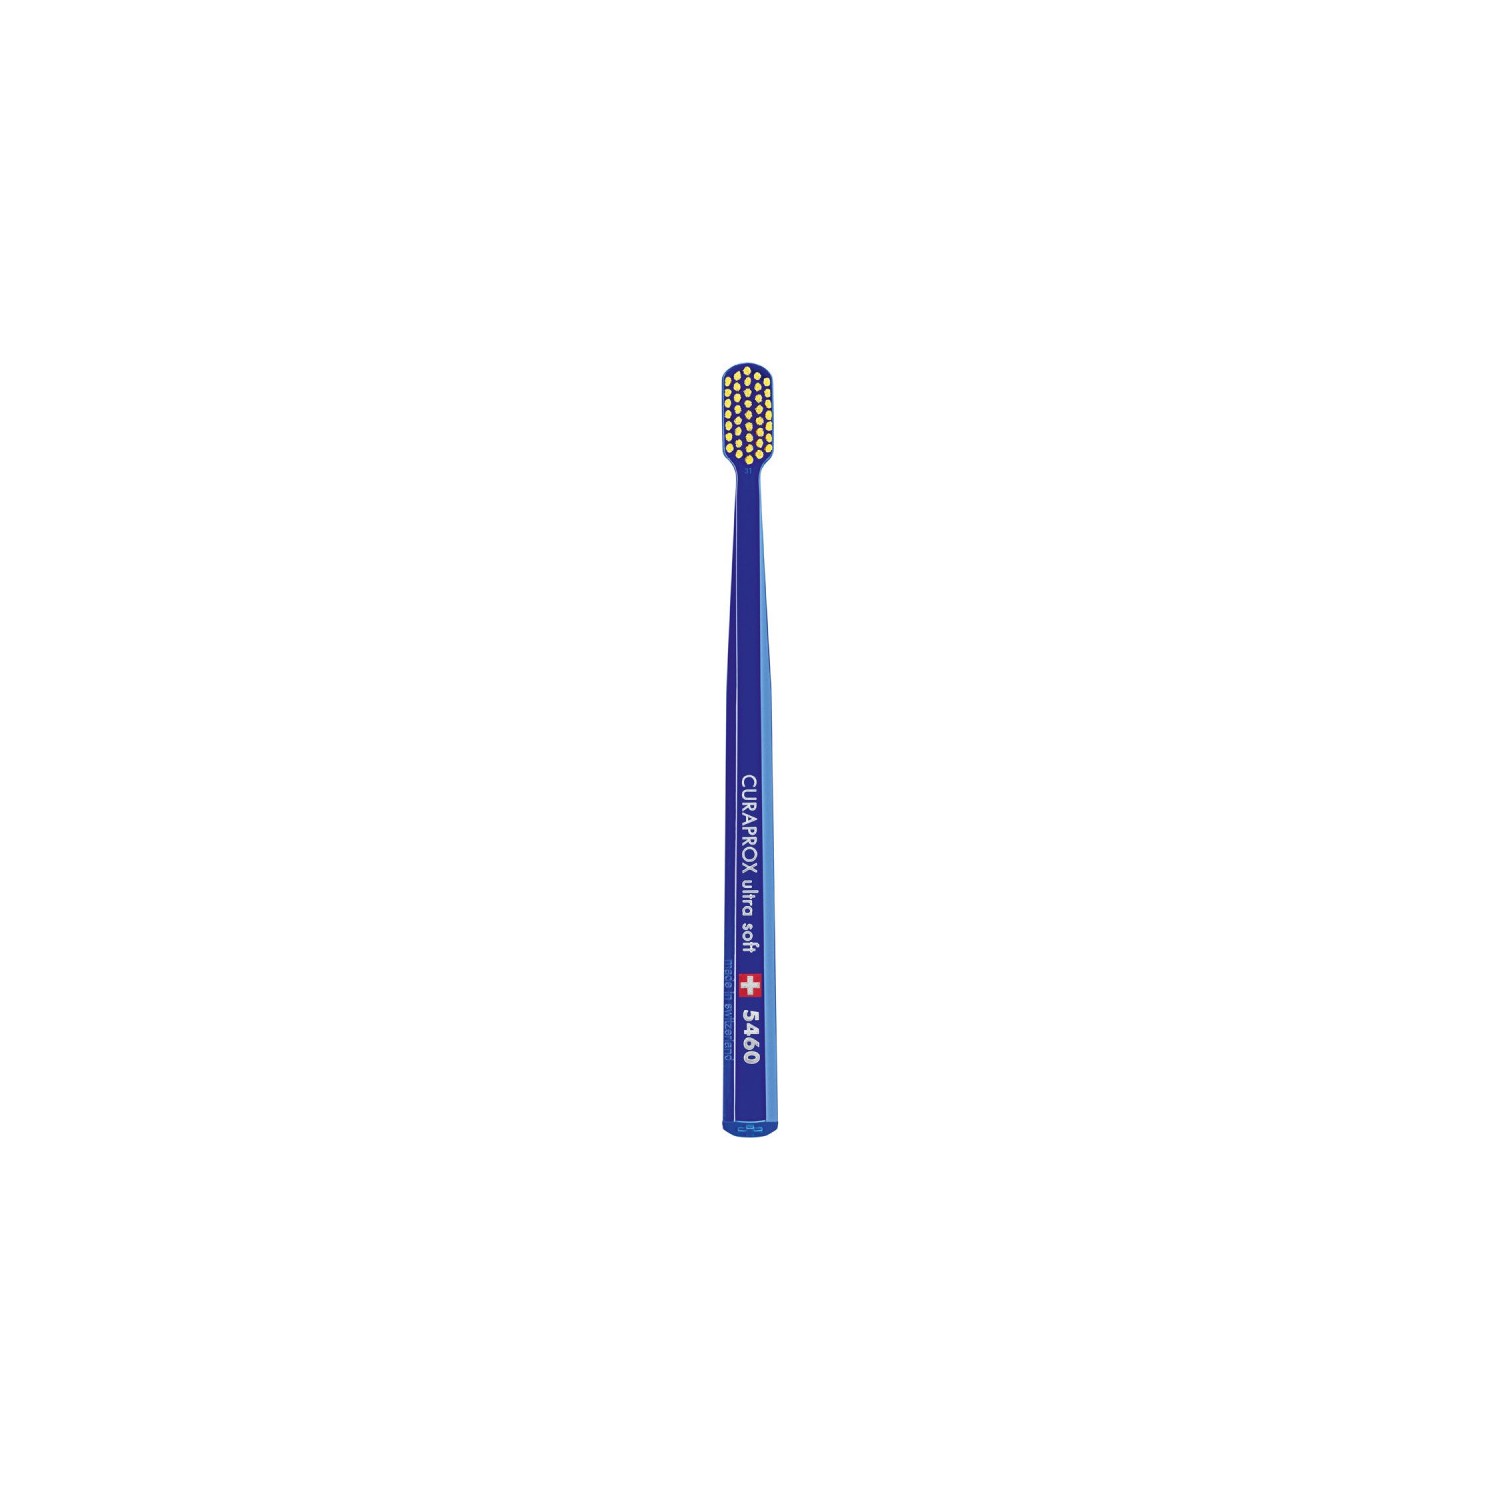 Зубная щетка Curaprox ультрамягкая CS5460, синий household electric toothbrush usb charging soft hair waterproof wave vibration toothbrush